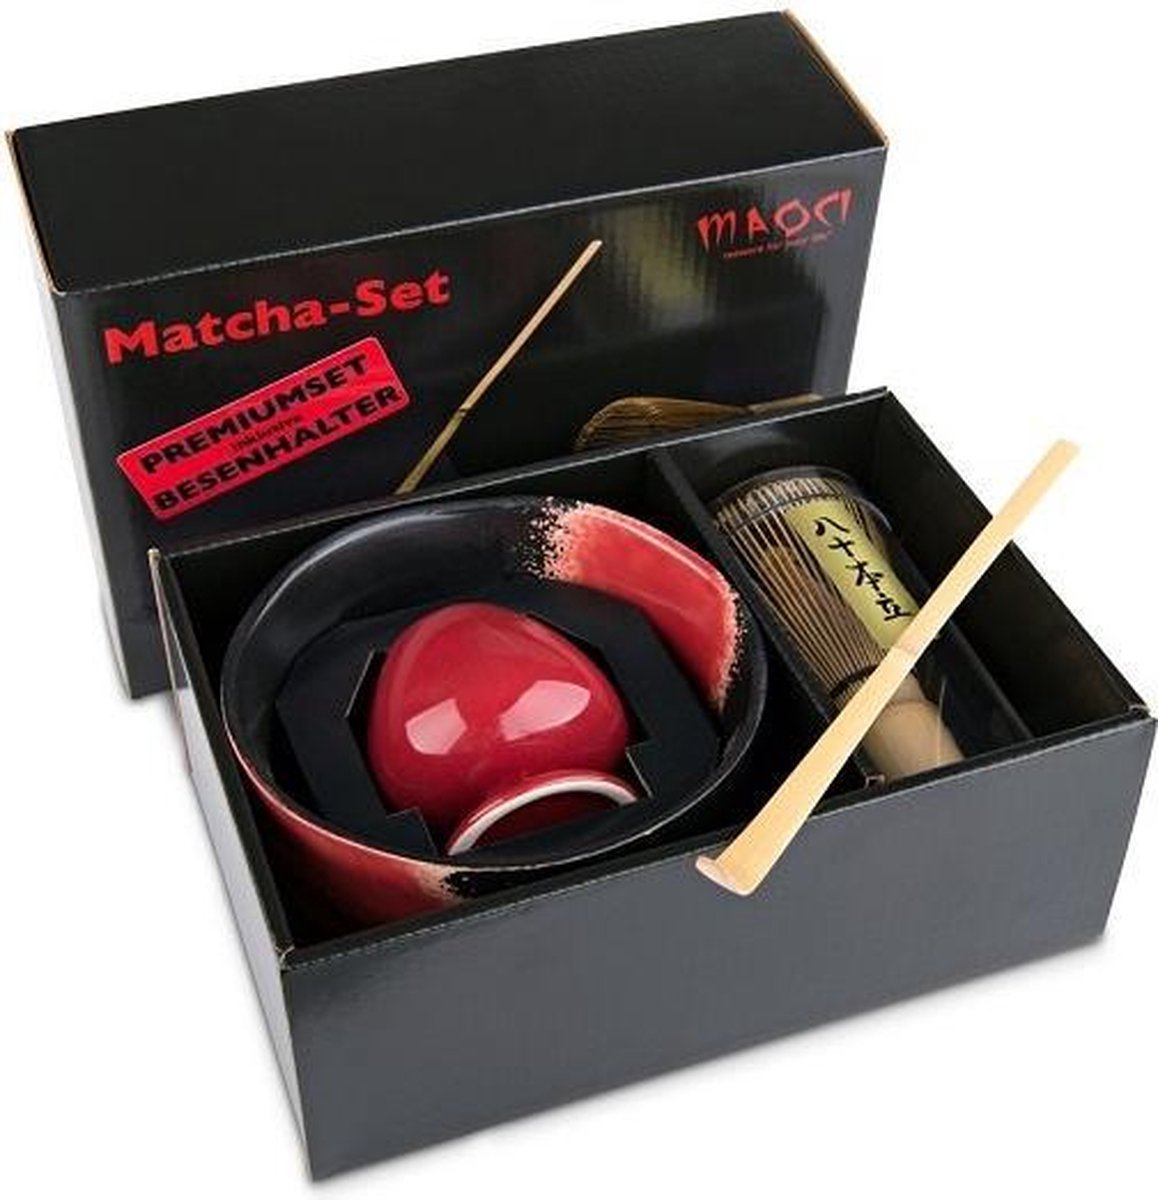 Matcha thee set inclusief handgemaakte matcha kom, Bamboe matcha klopper, chasen houder en bamboe maatschep - Complete Matcha Set - Merkloos